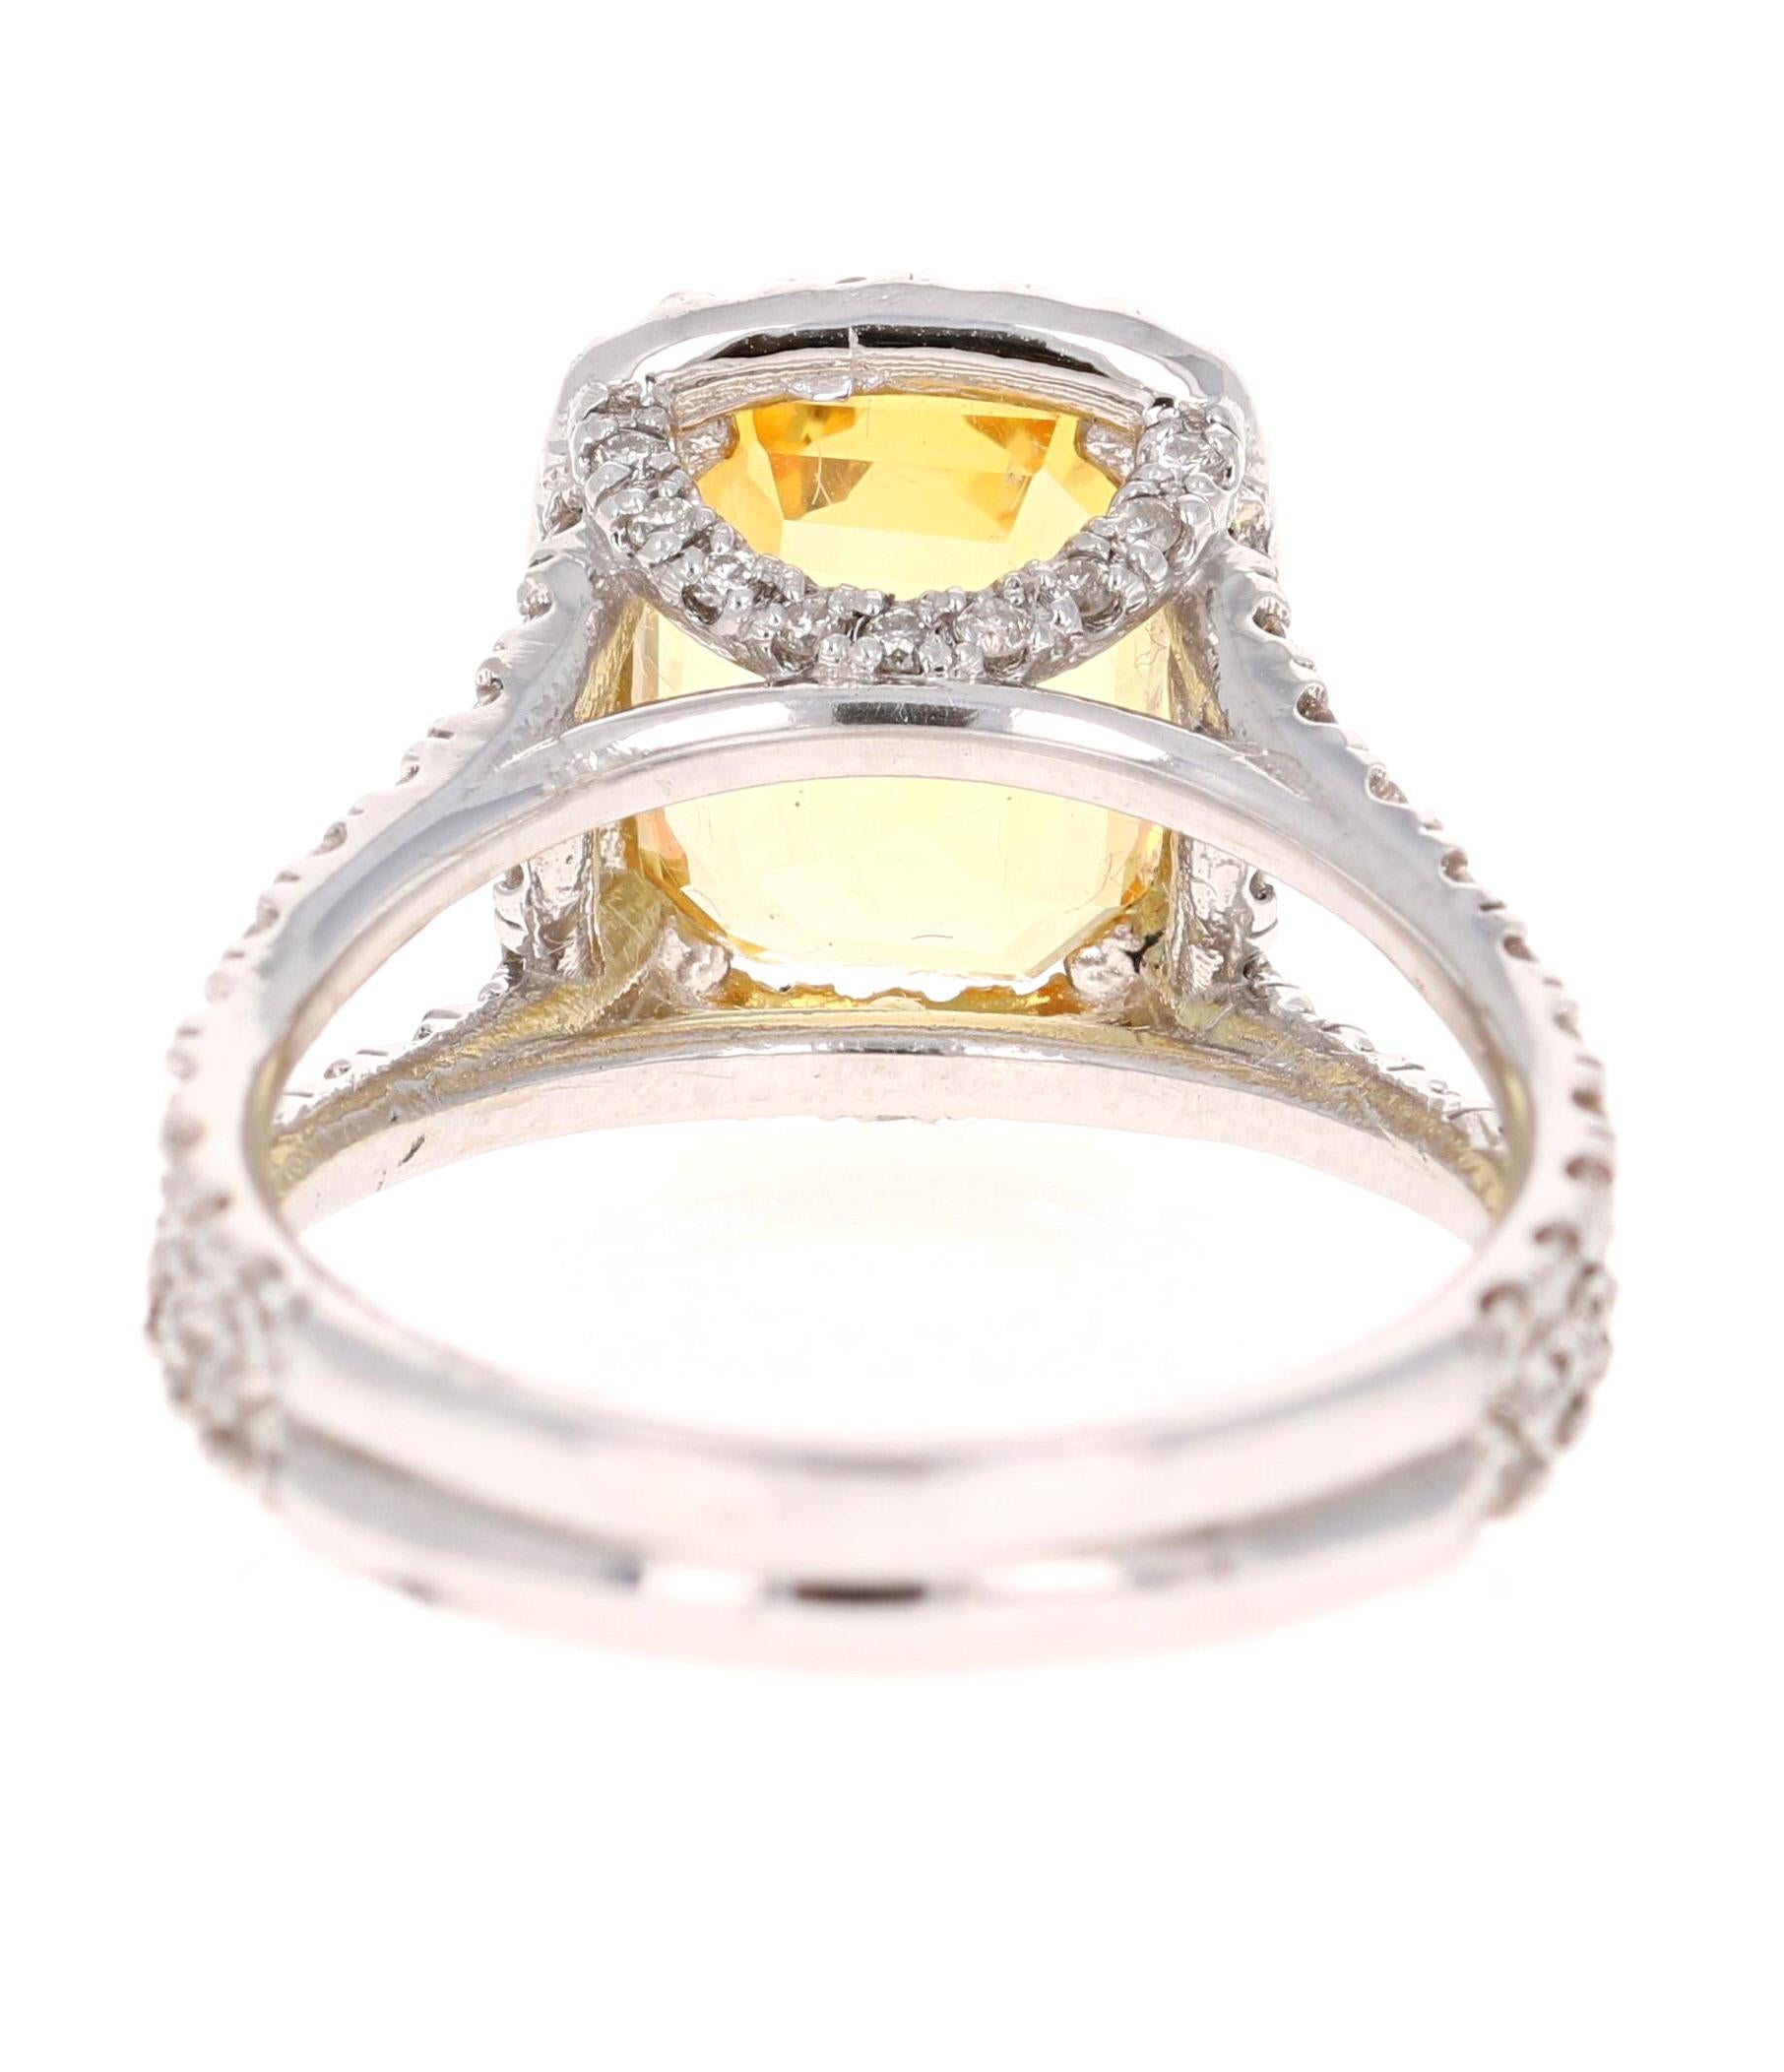 Emerald Cut 6.51 Carat GIA Certified Yellow Sapphire and Diamond 14 Karat Yellow Gold Ring